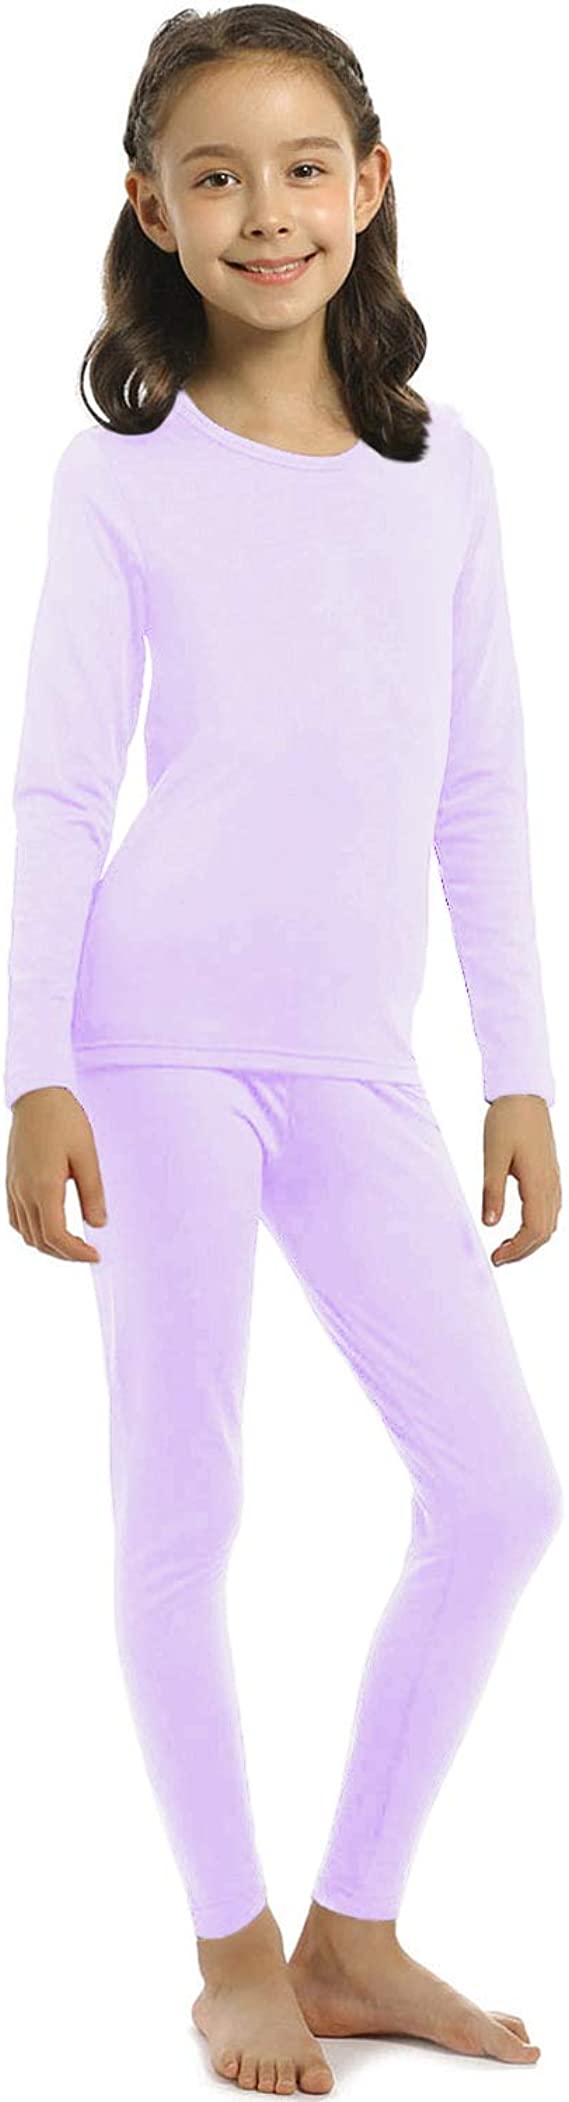 ViCherub Fleece Lined Girls’ Thermal Underwear Set